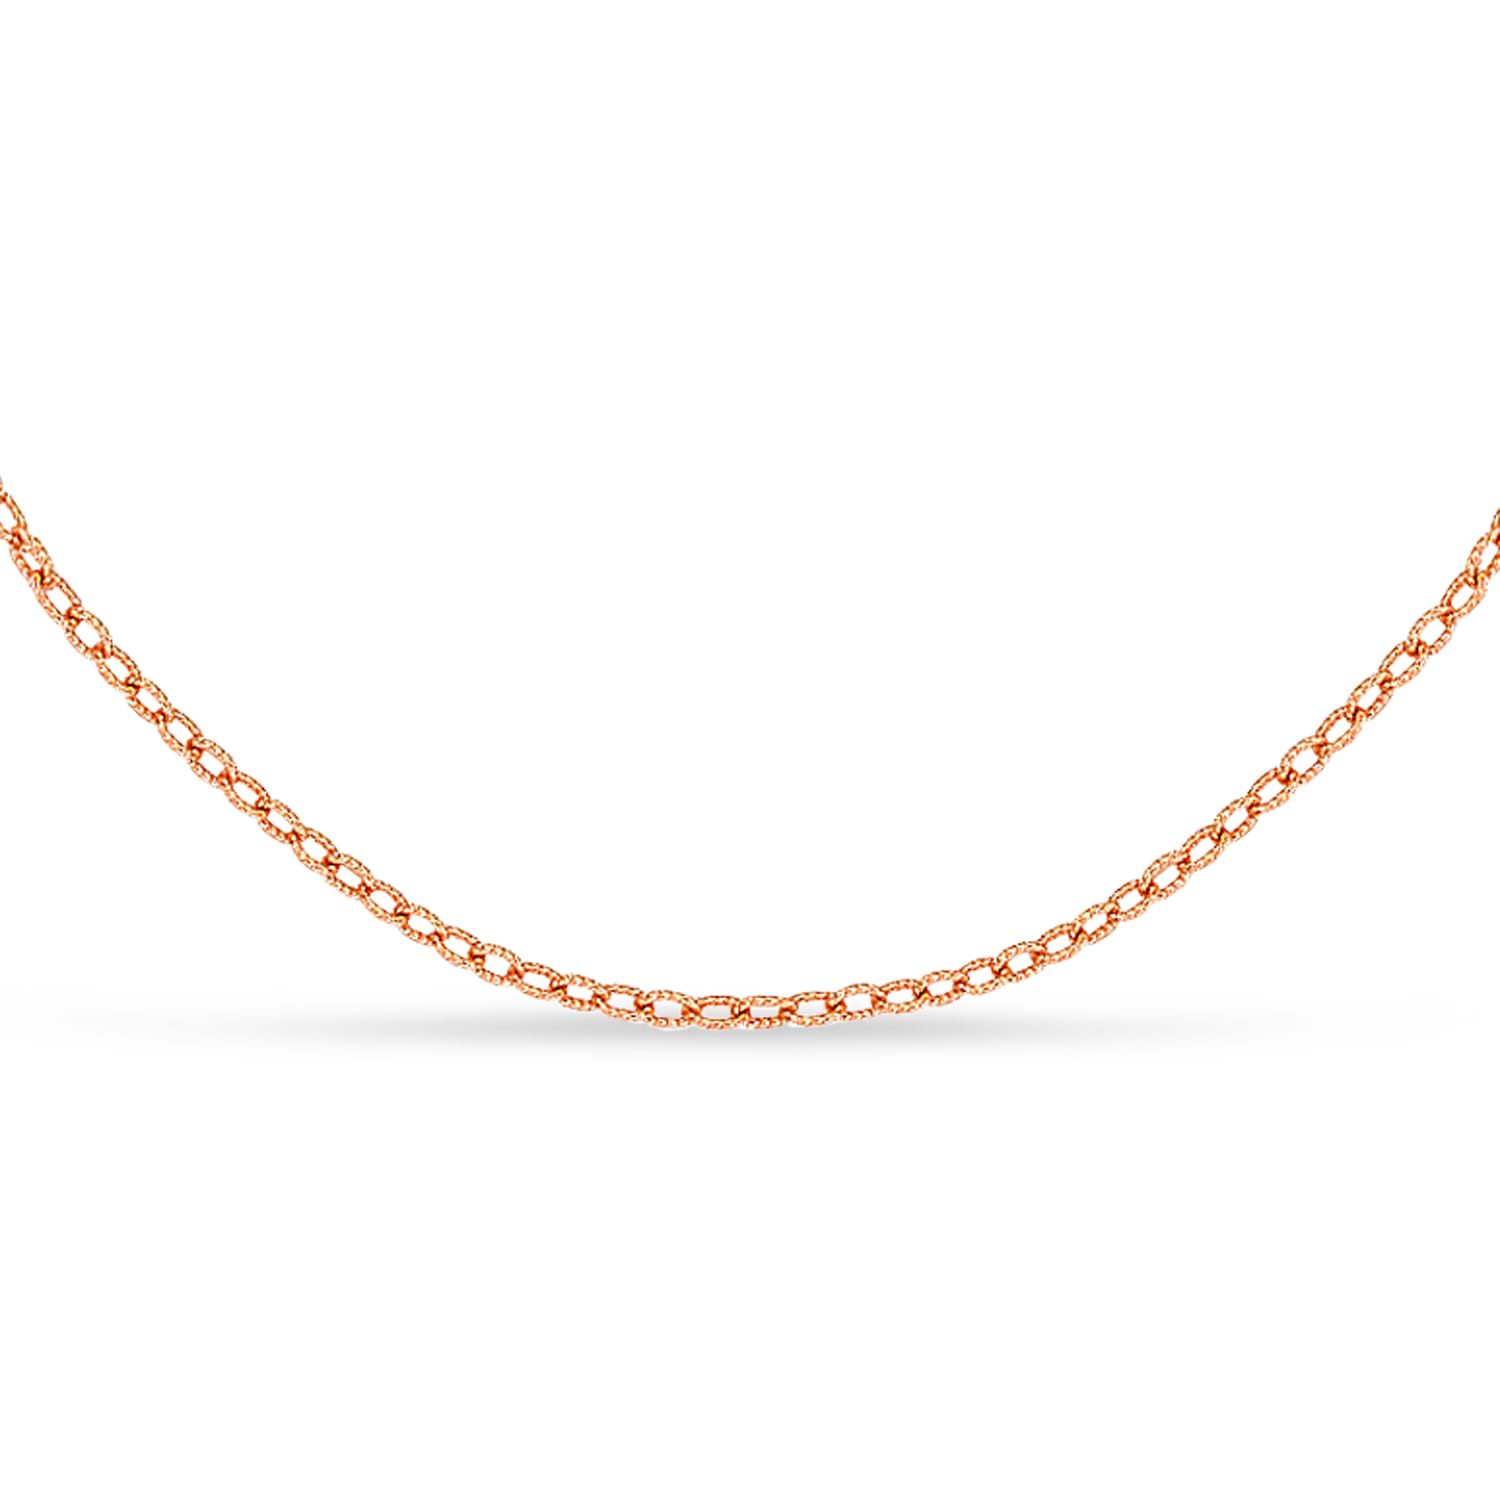 Designer Rolo Chain Necklace 14k Rose Gold